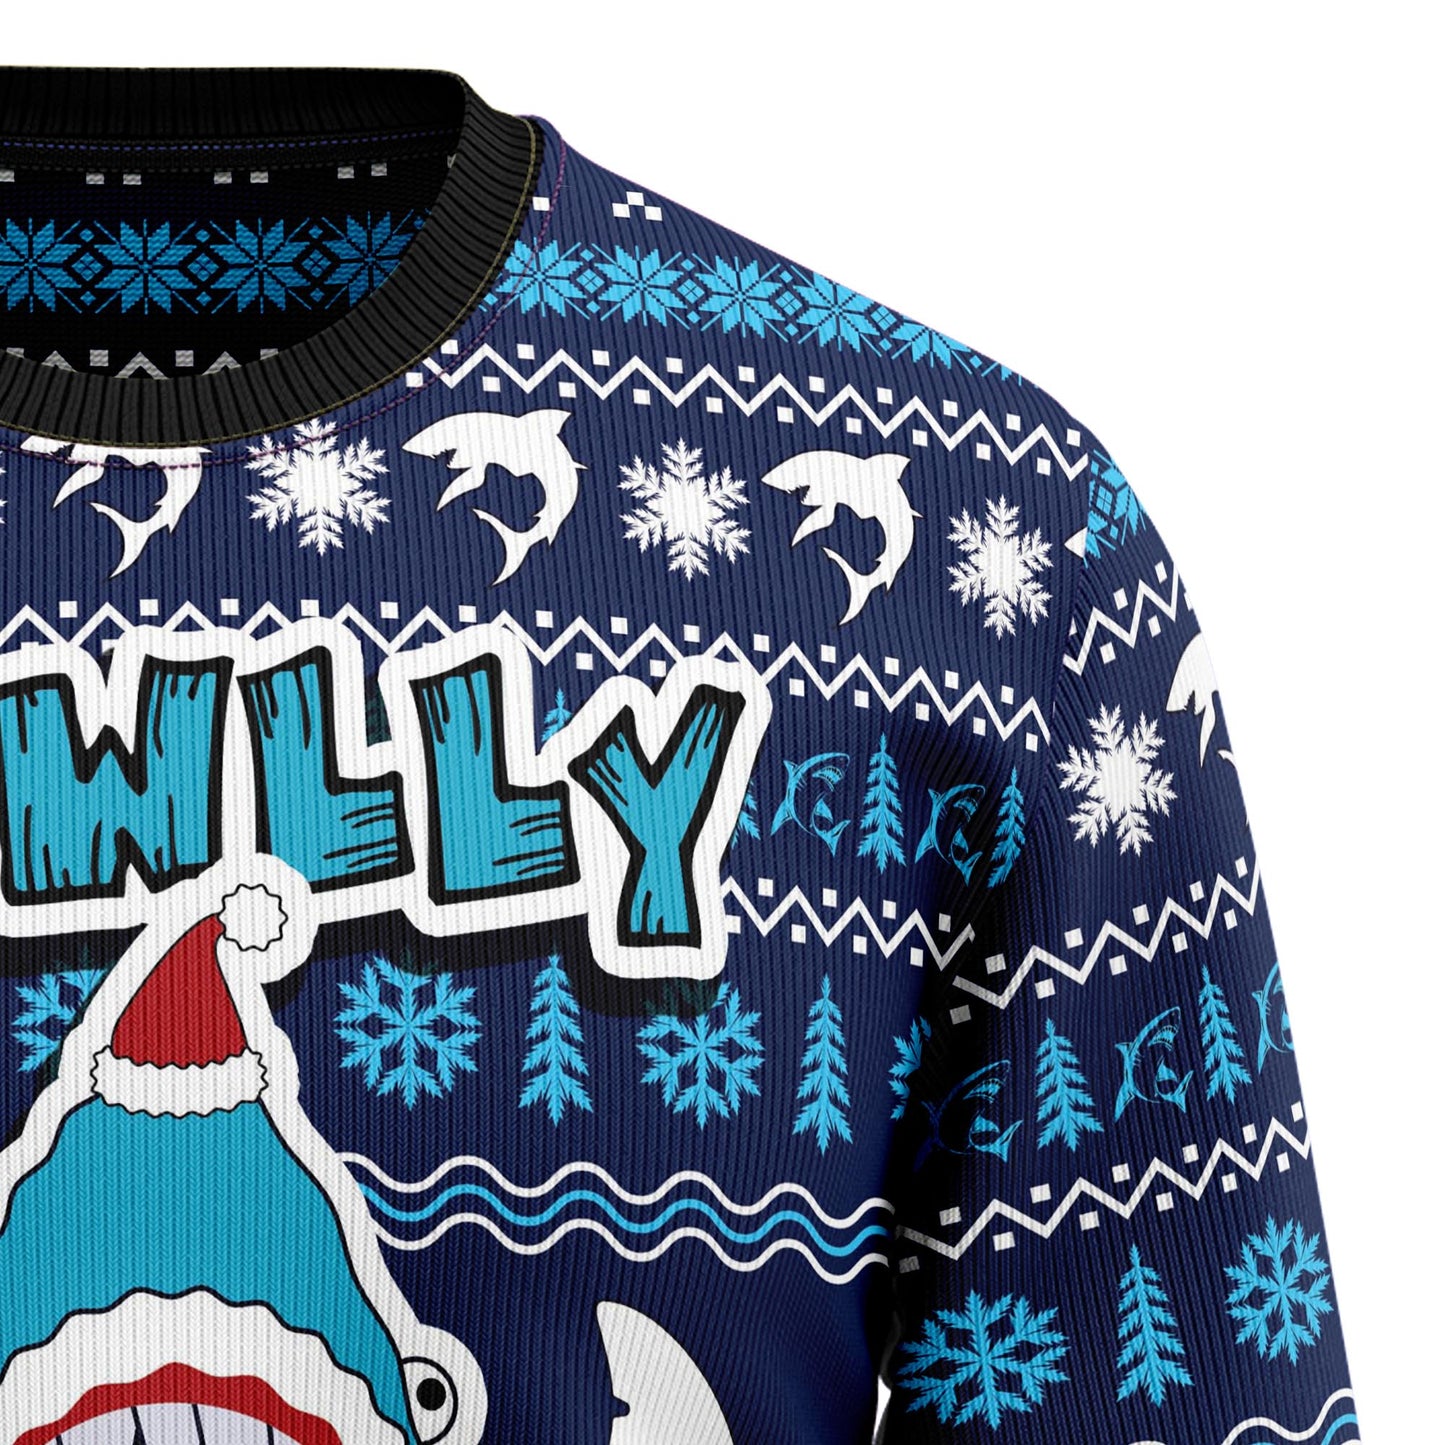 Shark Jawlly Christmas TY210 Ugly Christmas Sweater